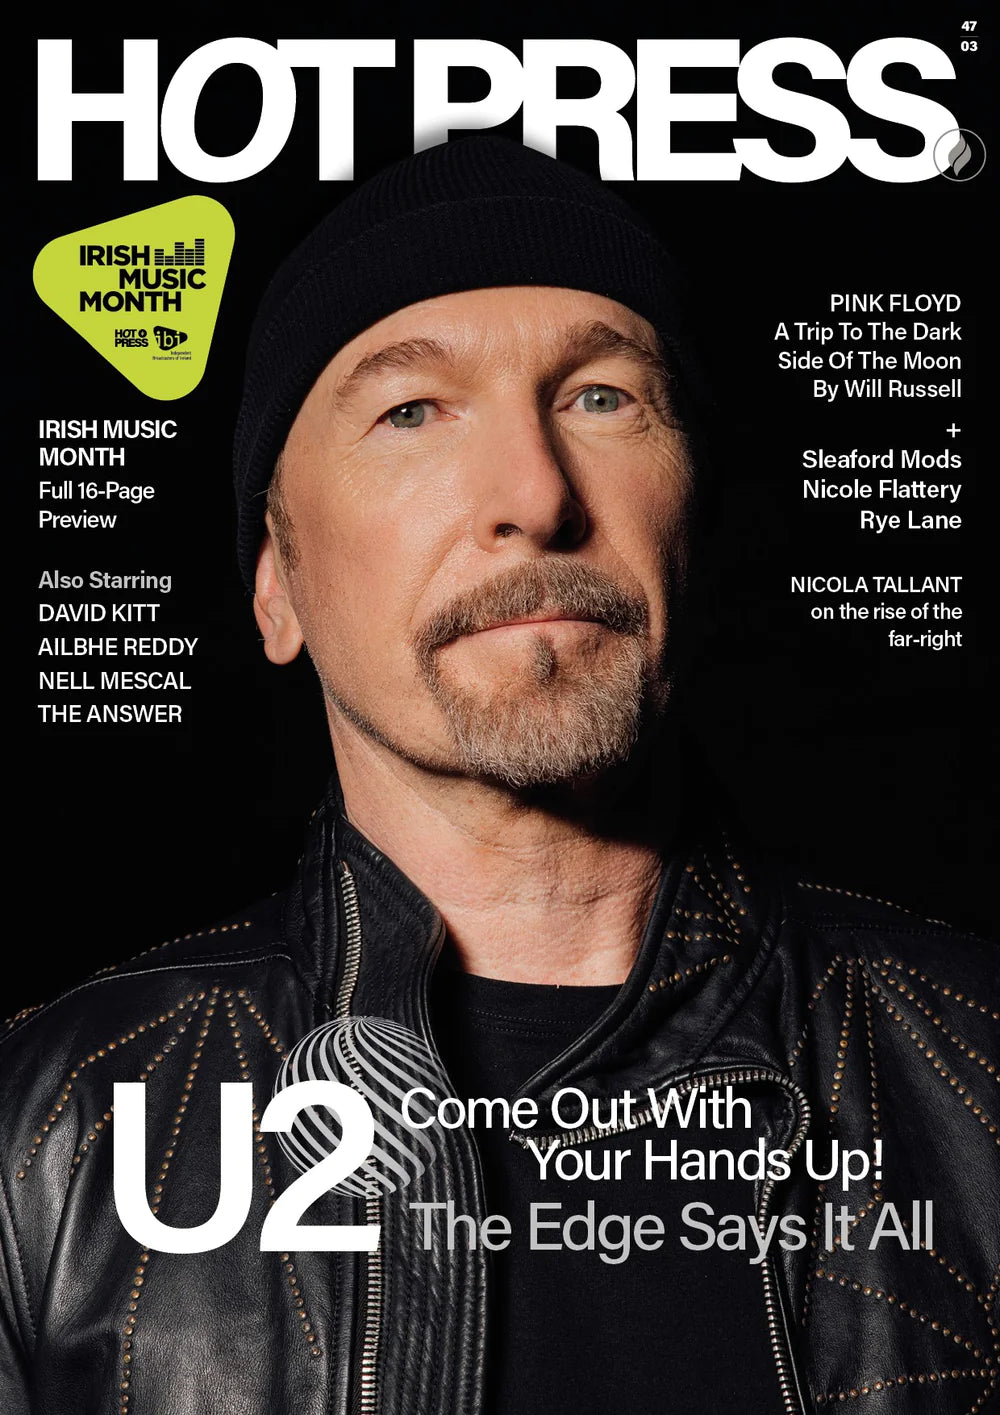 HOT PRESS Magazine ISSUE 47-03: THE EDGE U2